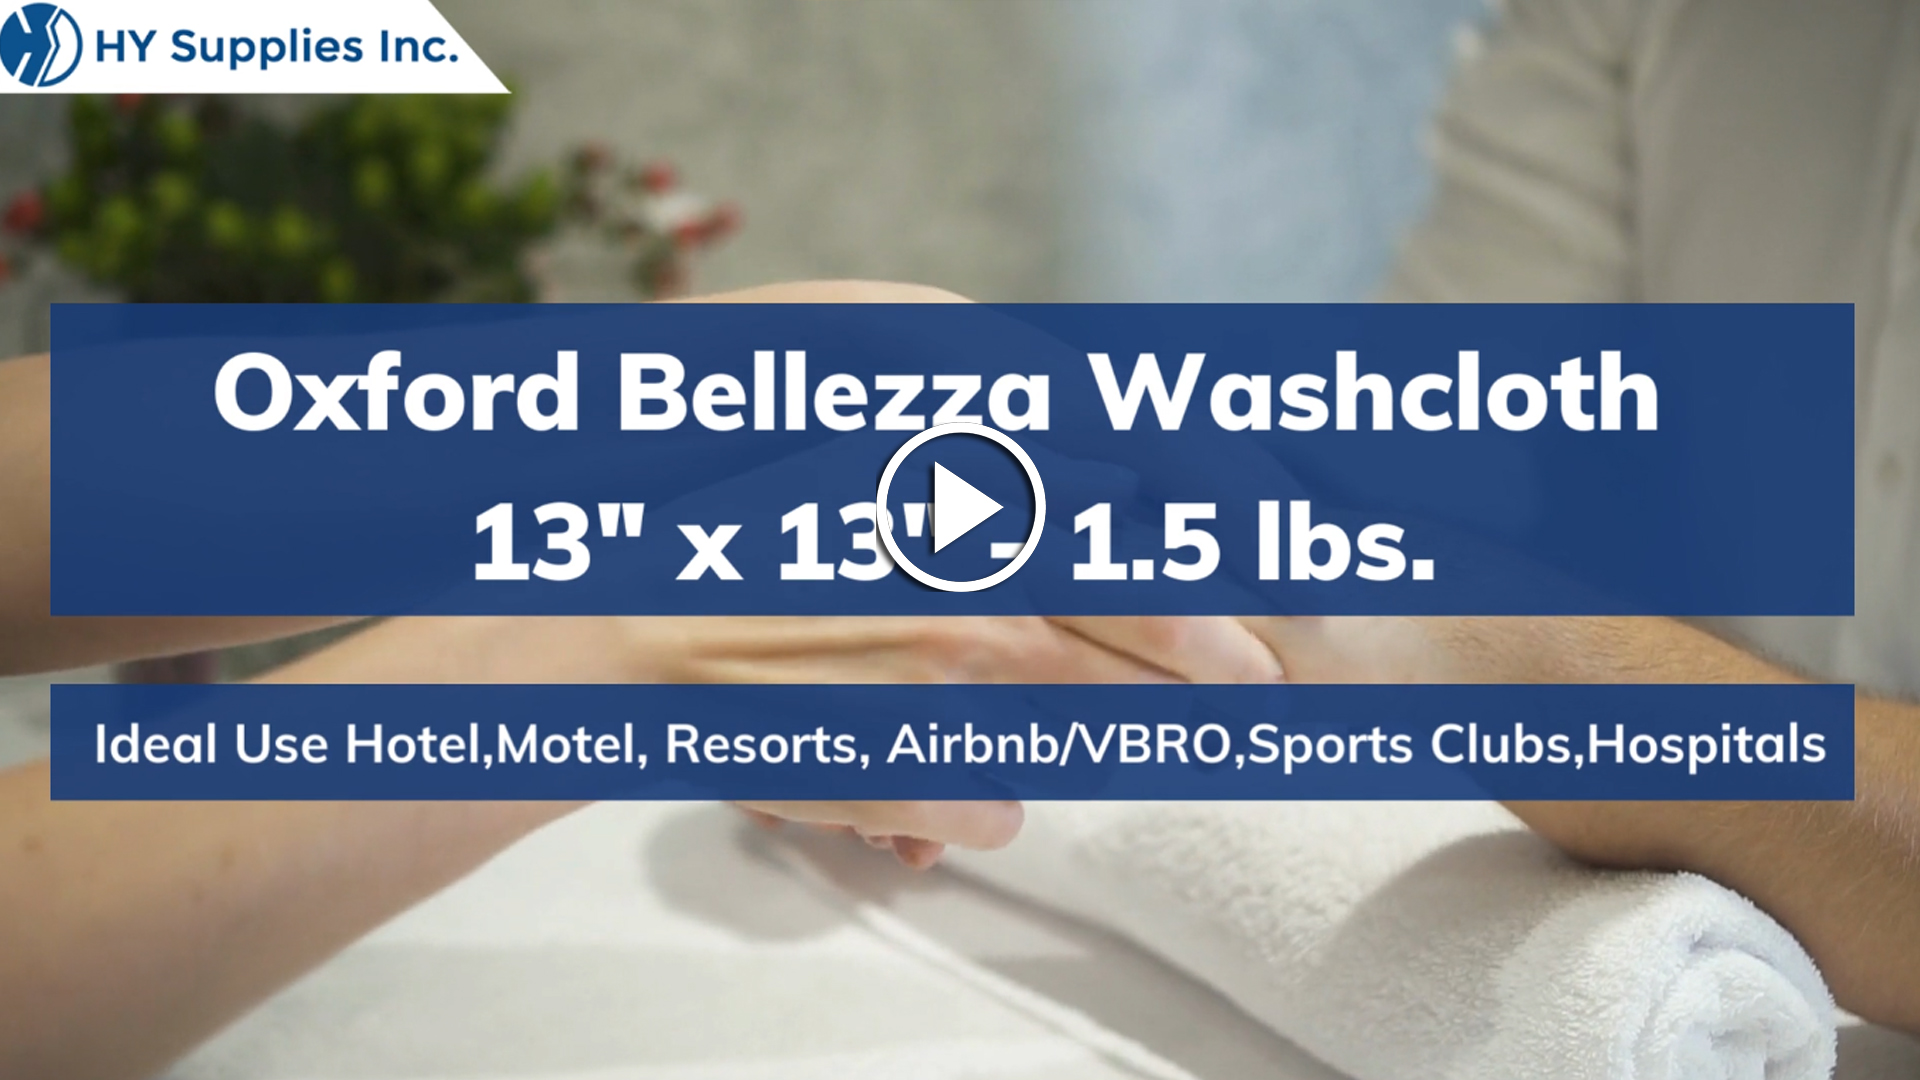 Oxford Bellezza Washcloth - 13" x 13" - 1.5 lbs.